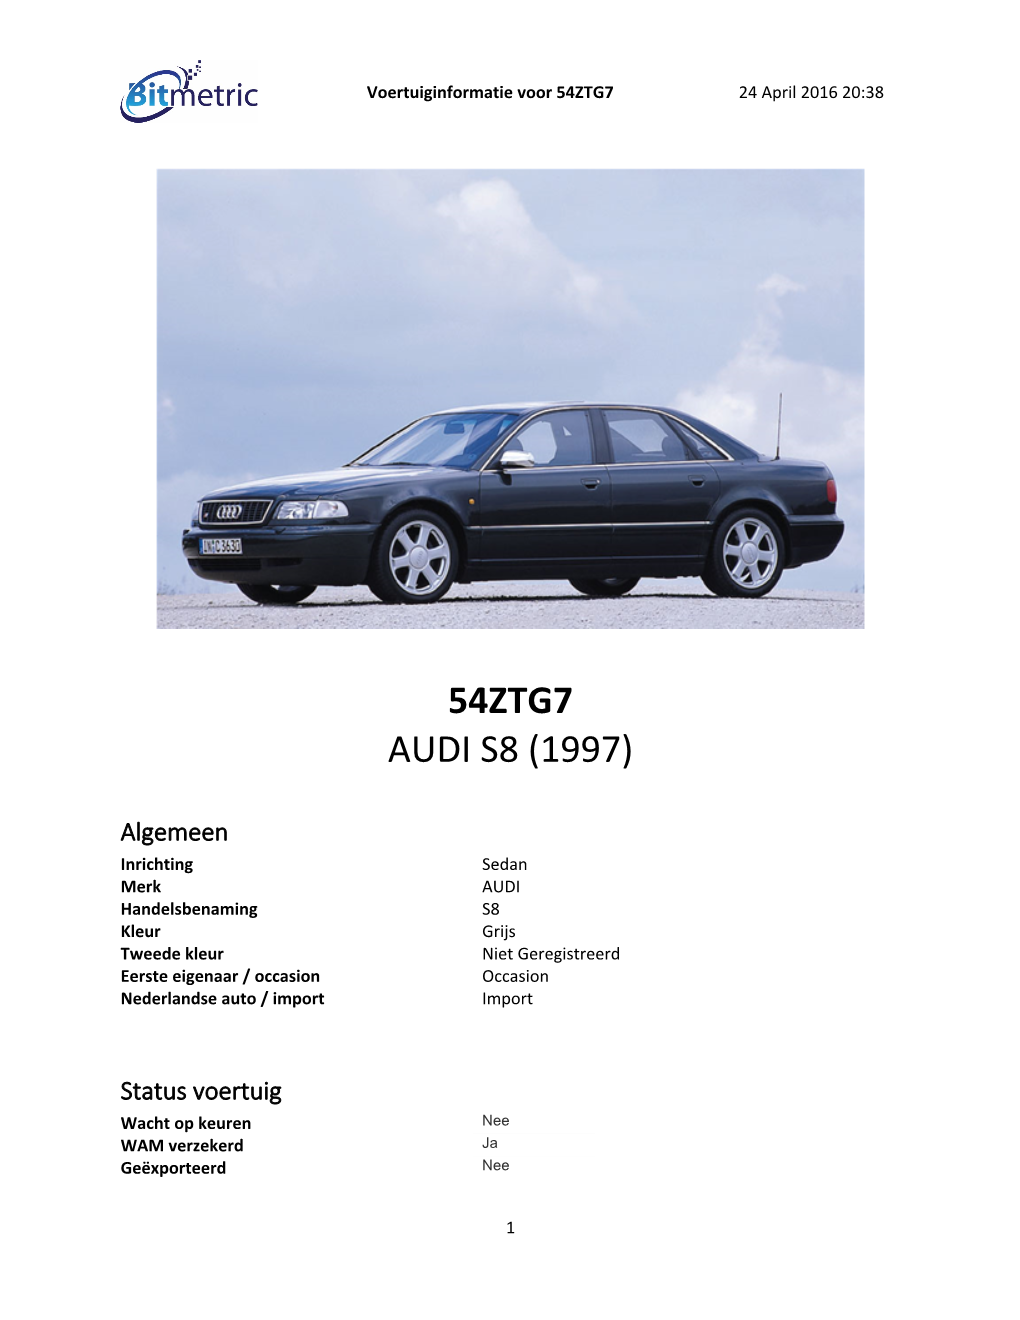 54Ztg7 Audi S8 (1997)